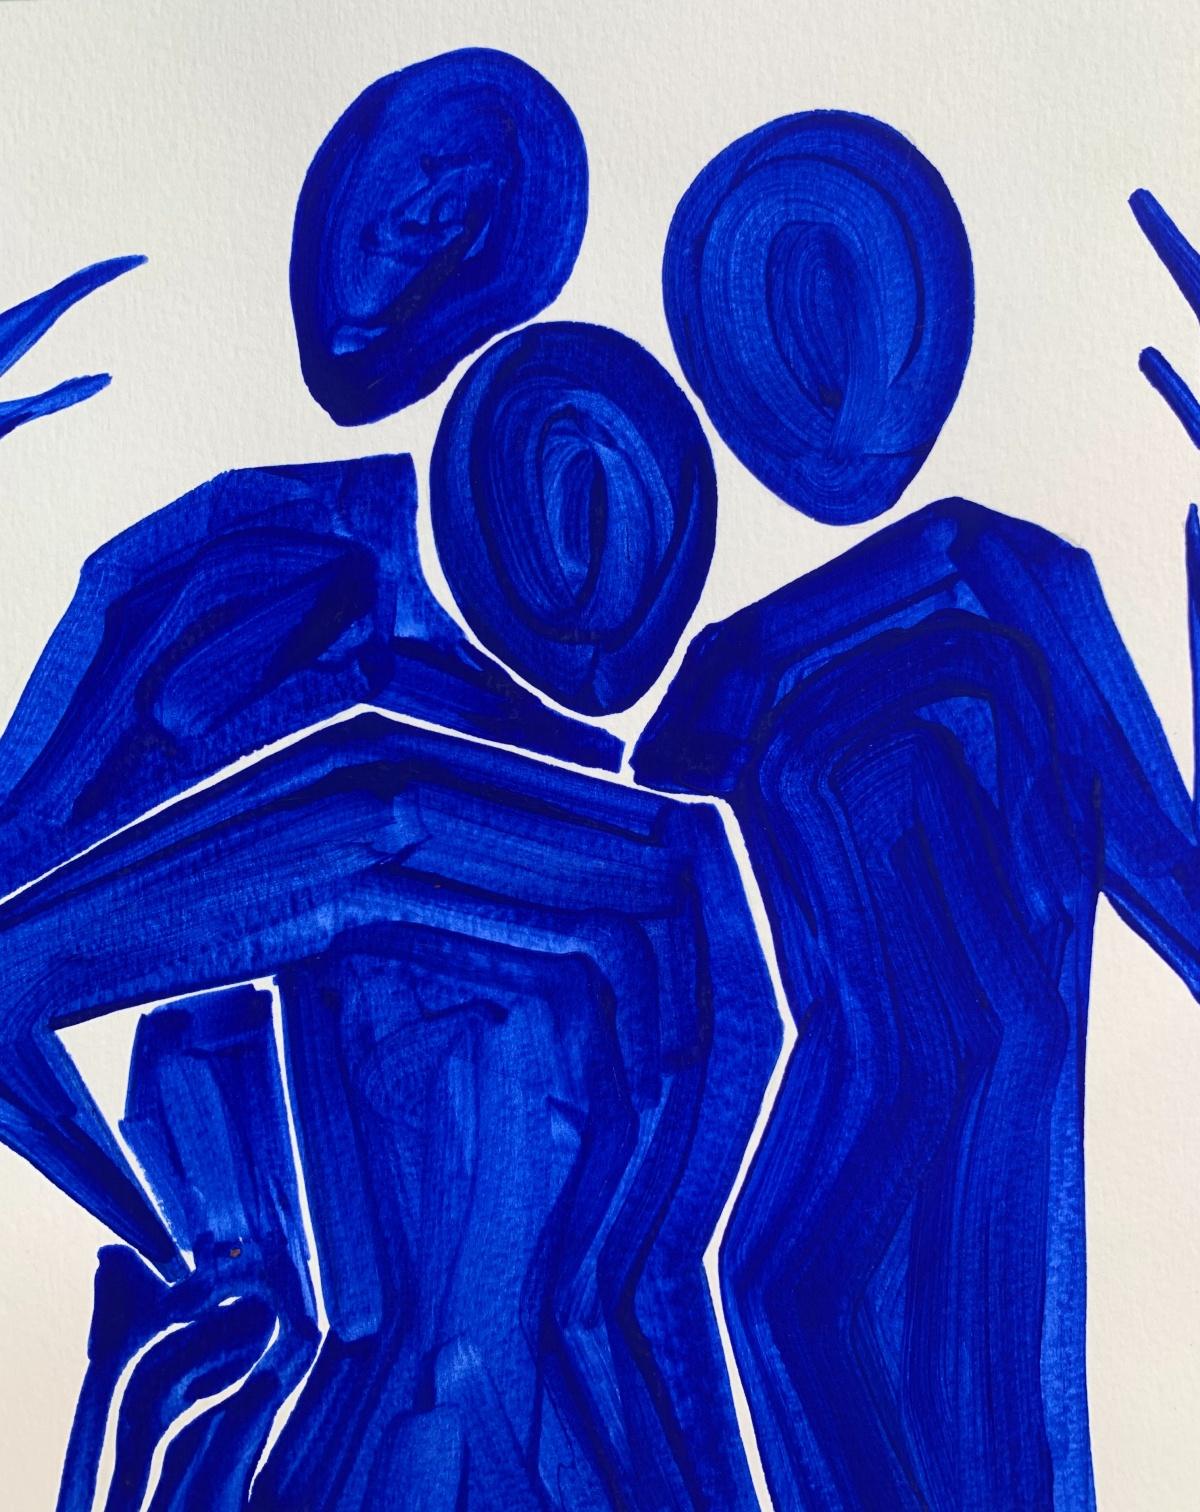 Three blue figures - Figurative Painting on Paper, Minimalist, Colorful, Vibrant 1